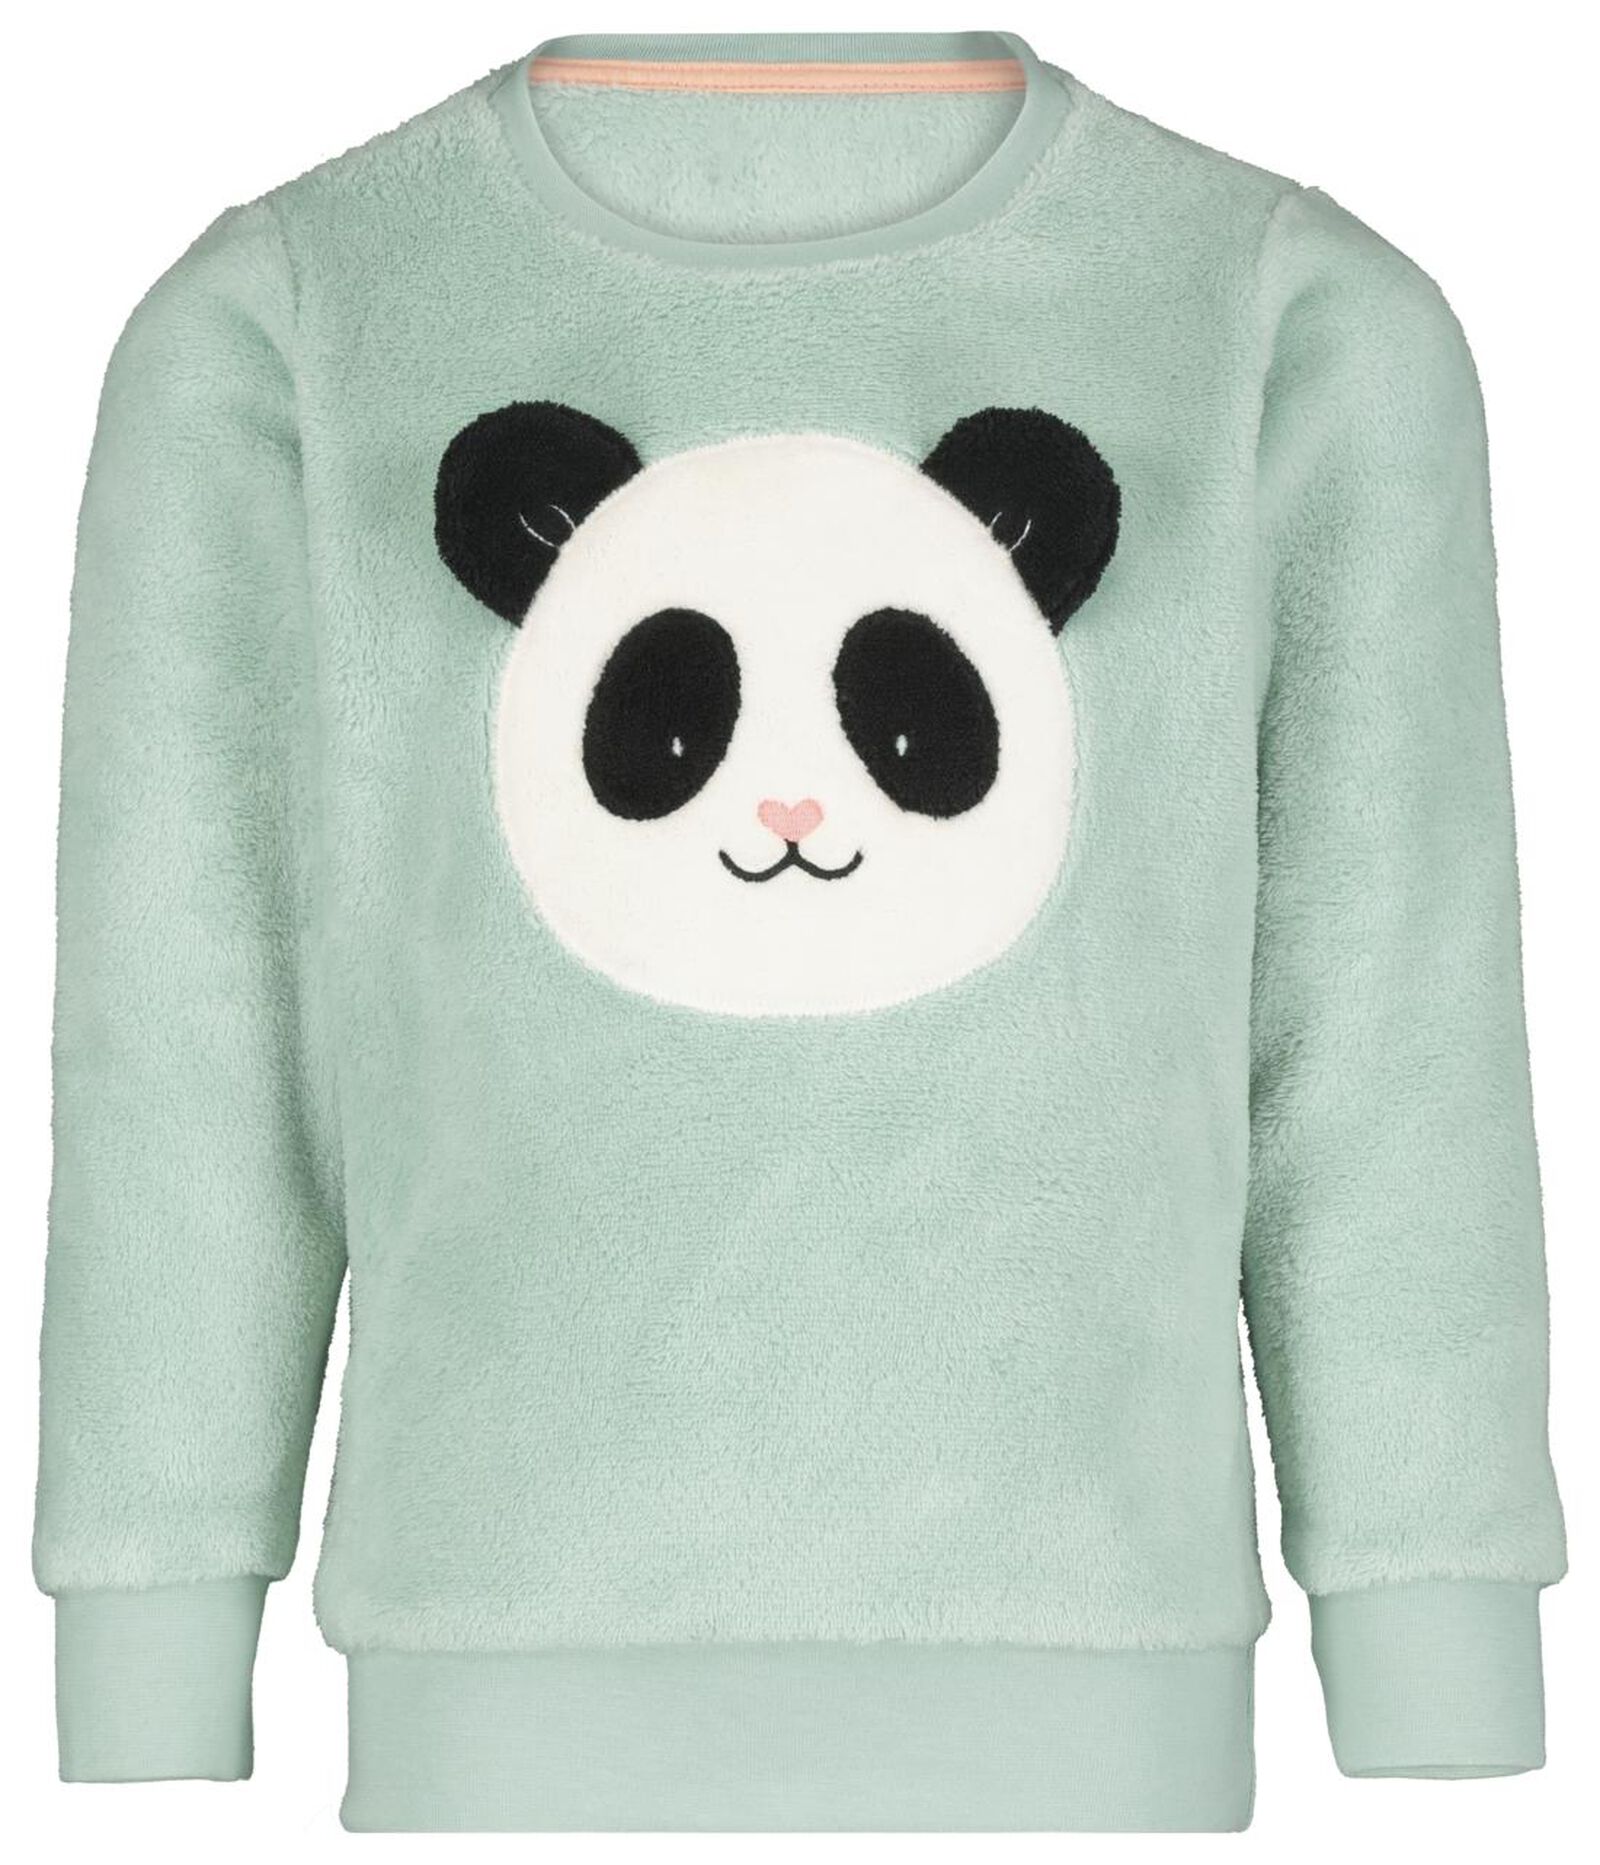 kinderpyjama fleece panda lichtgroen - HEMA